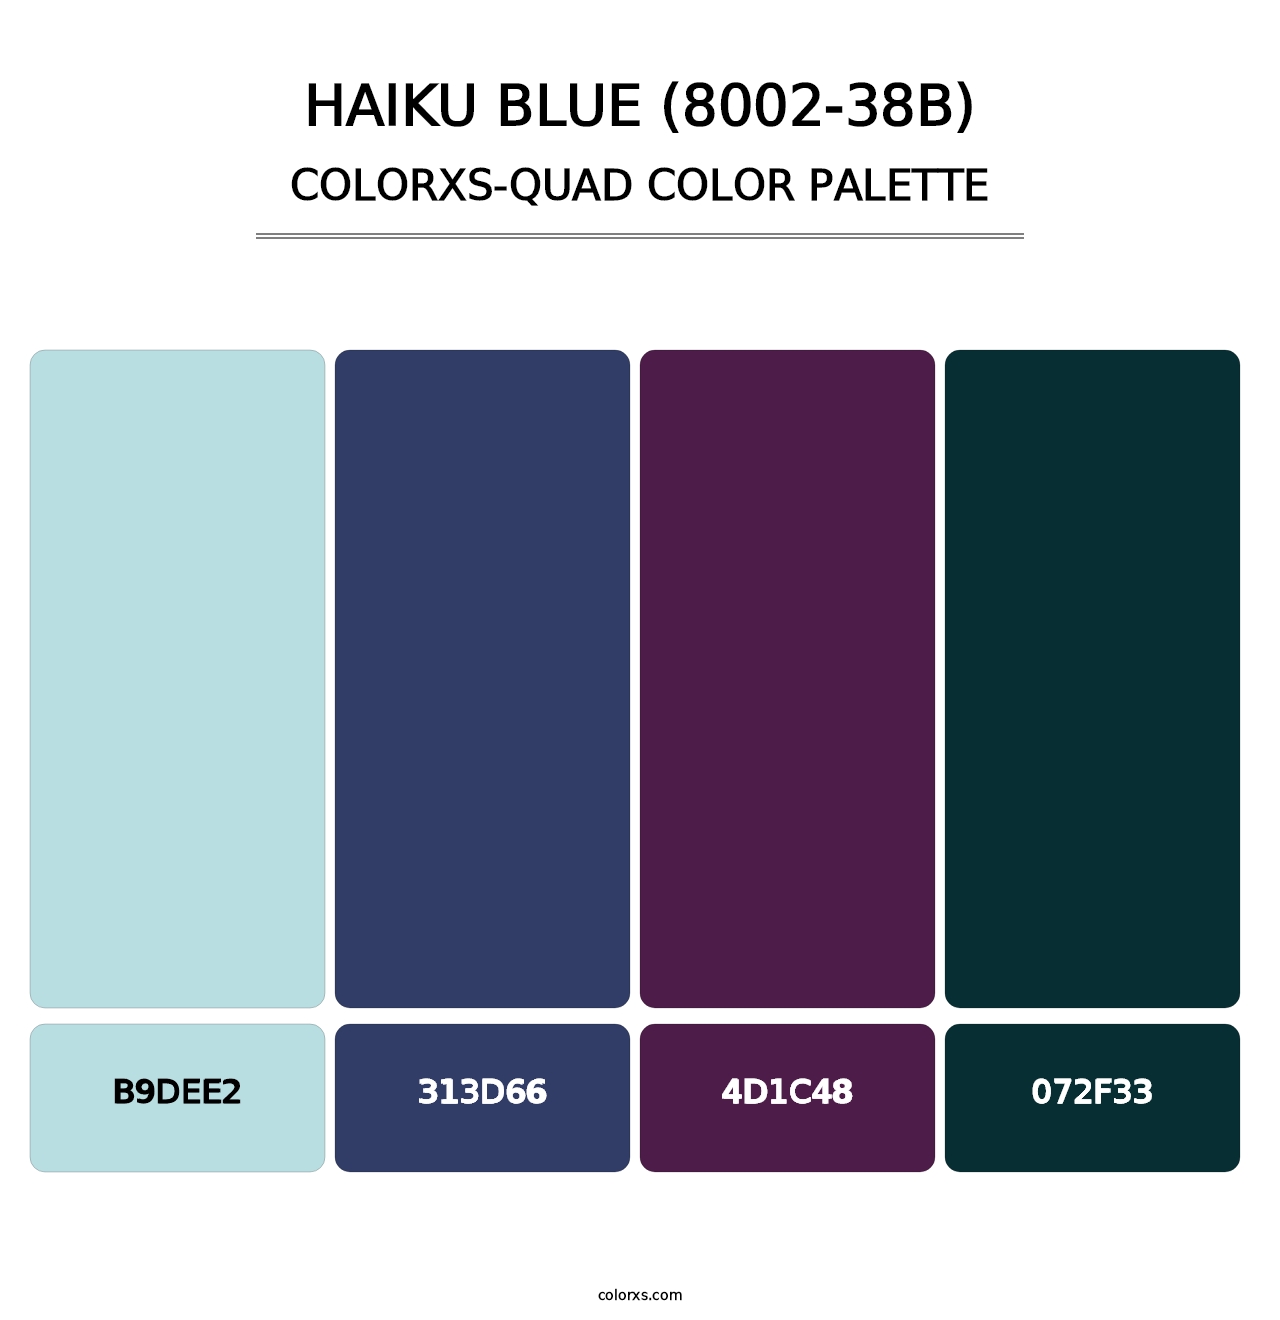 Haiku Blue (8002-38B) - Colorxs Quad Palette